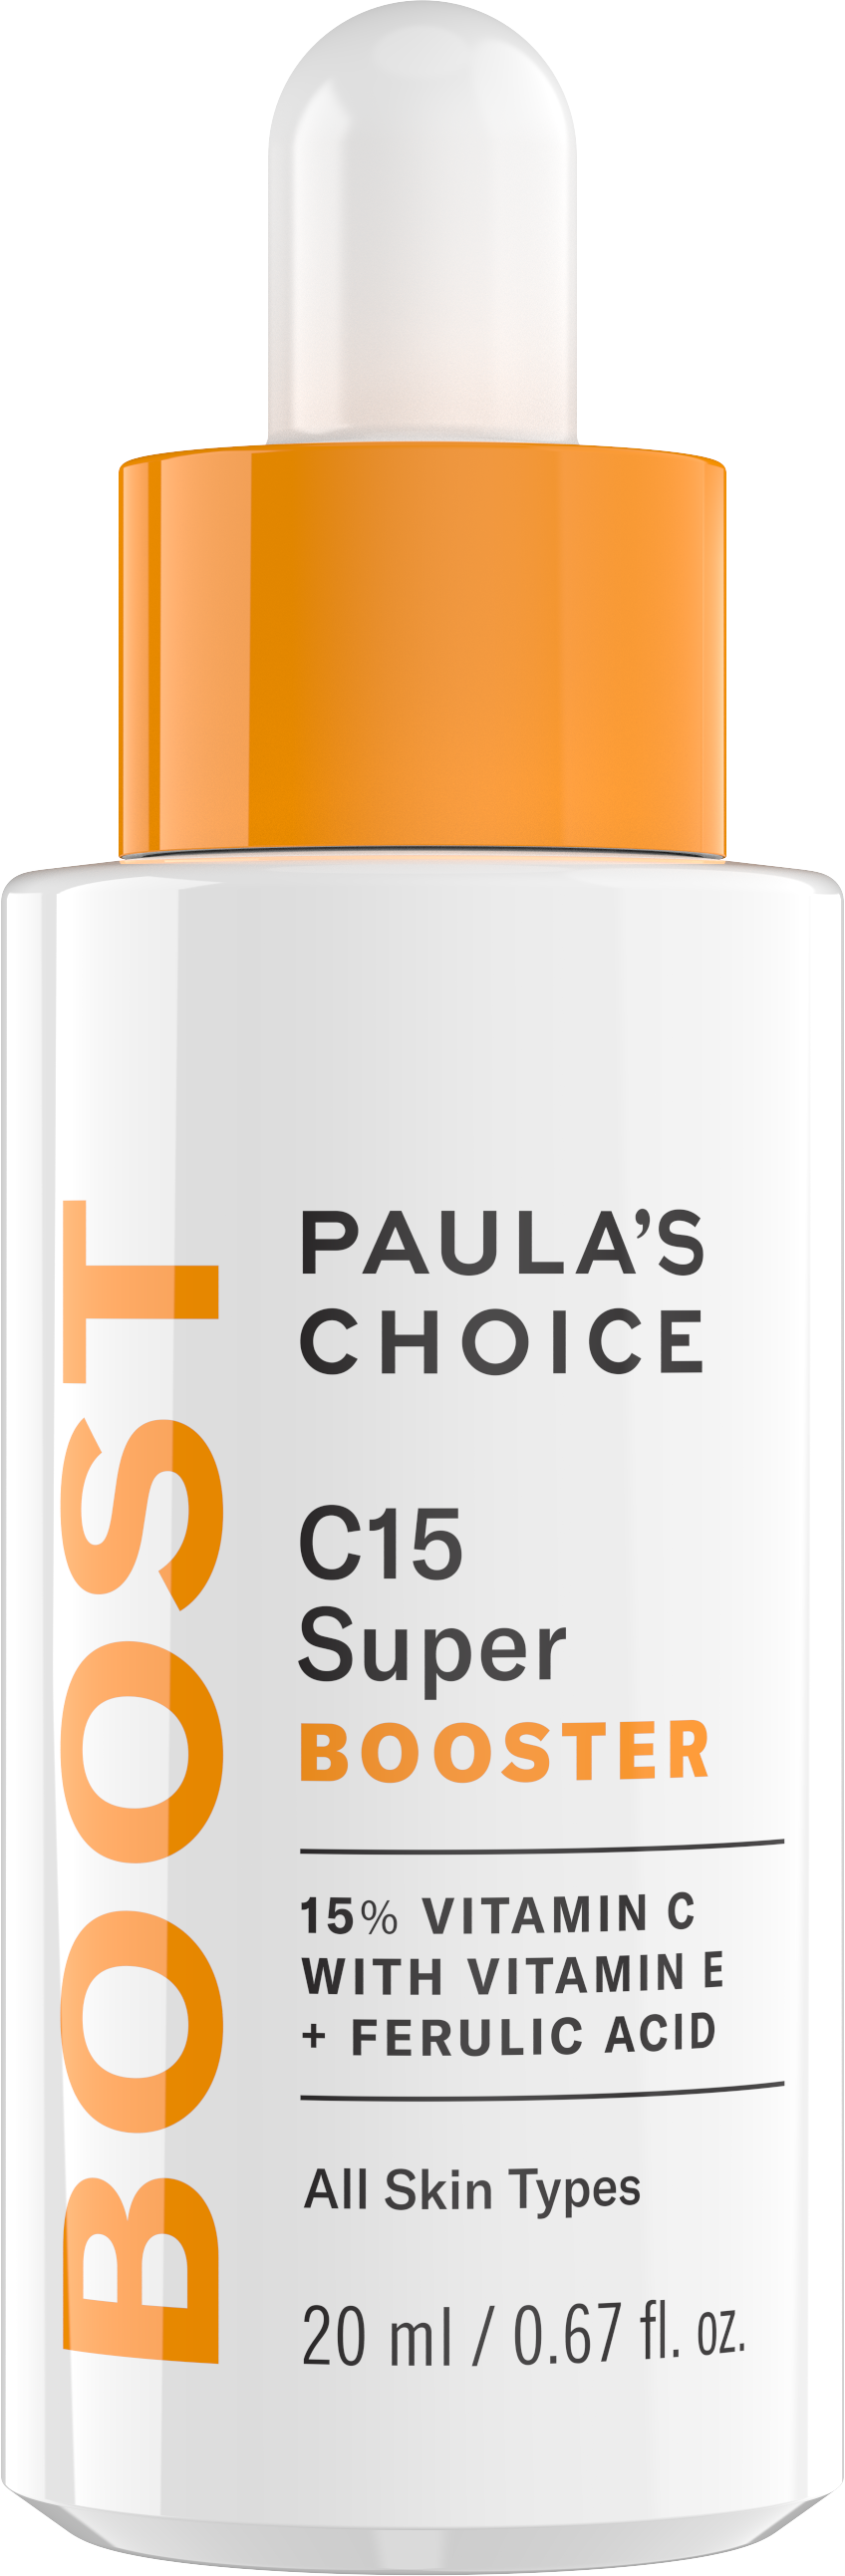 Paula's Choice C15 Super Booster Paula's Choice C15 Super Booster 1